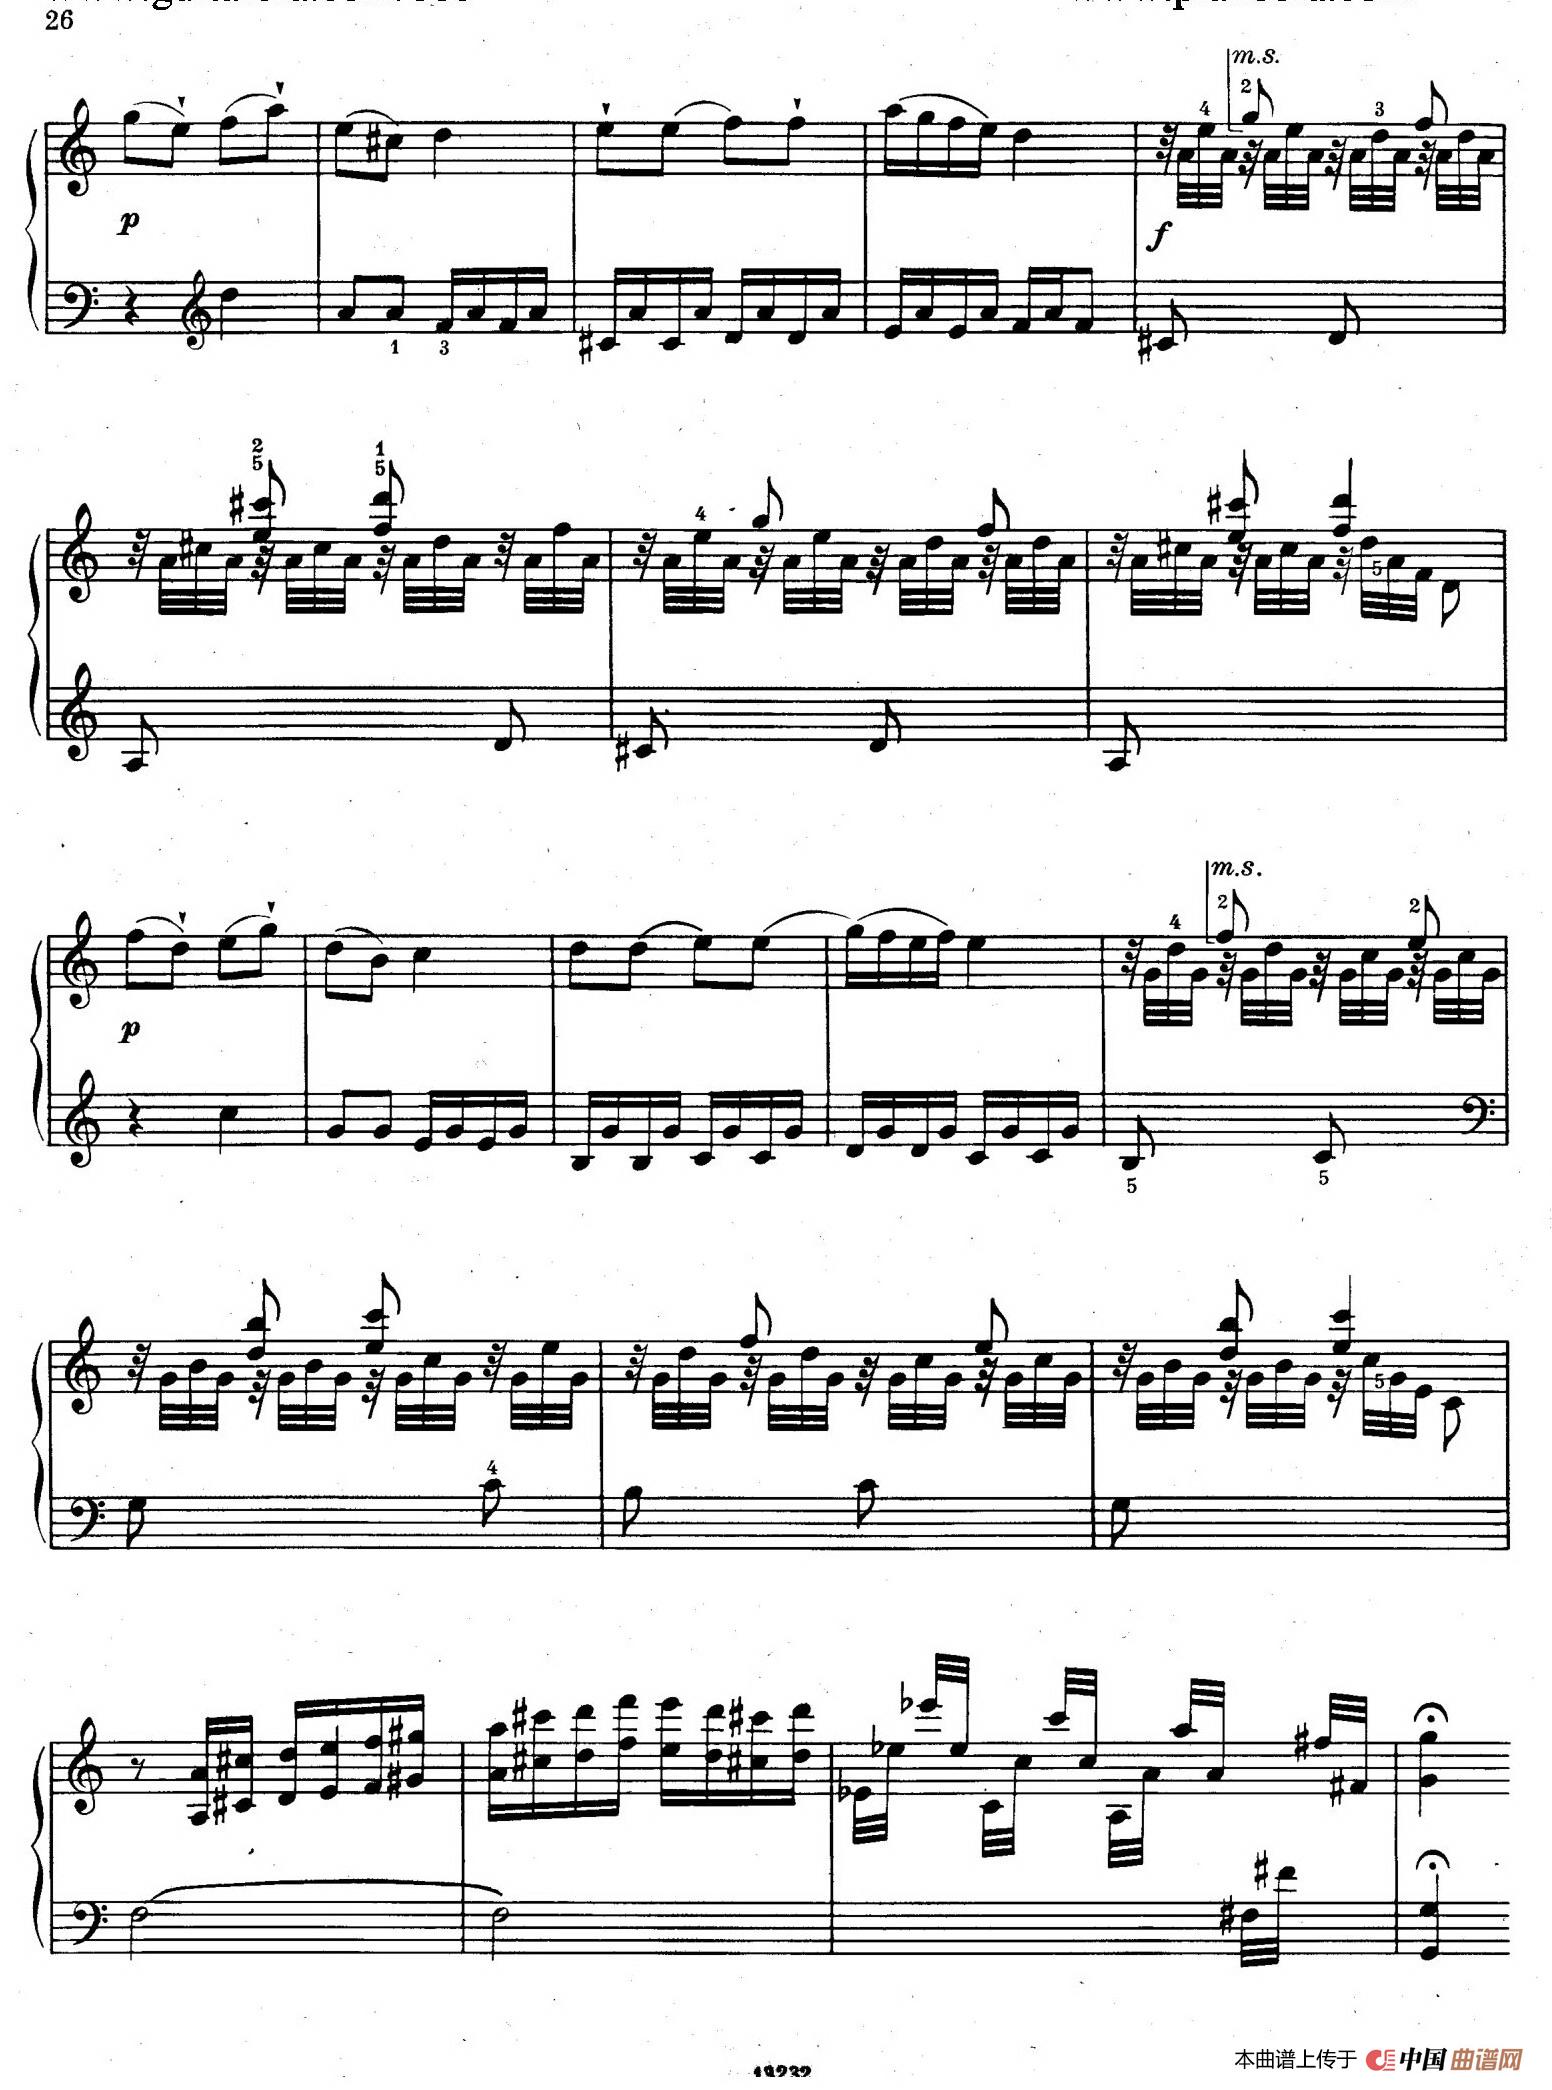 《Rondo in C Major》钢琴曲谱图分享